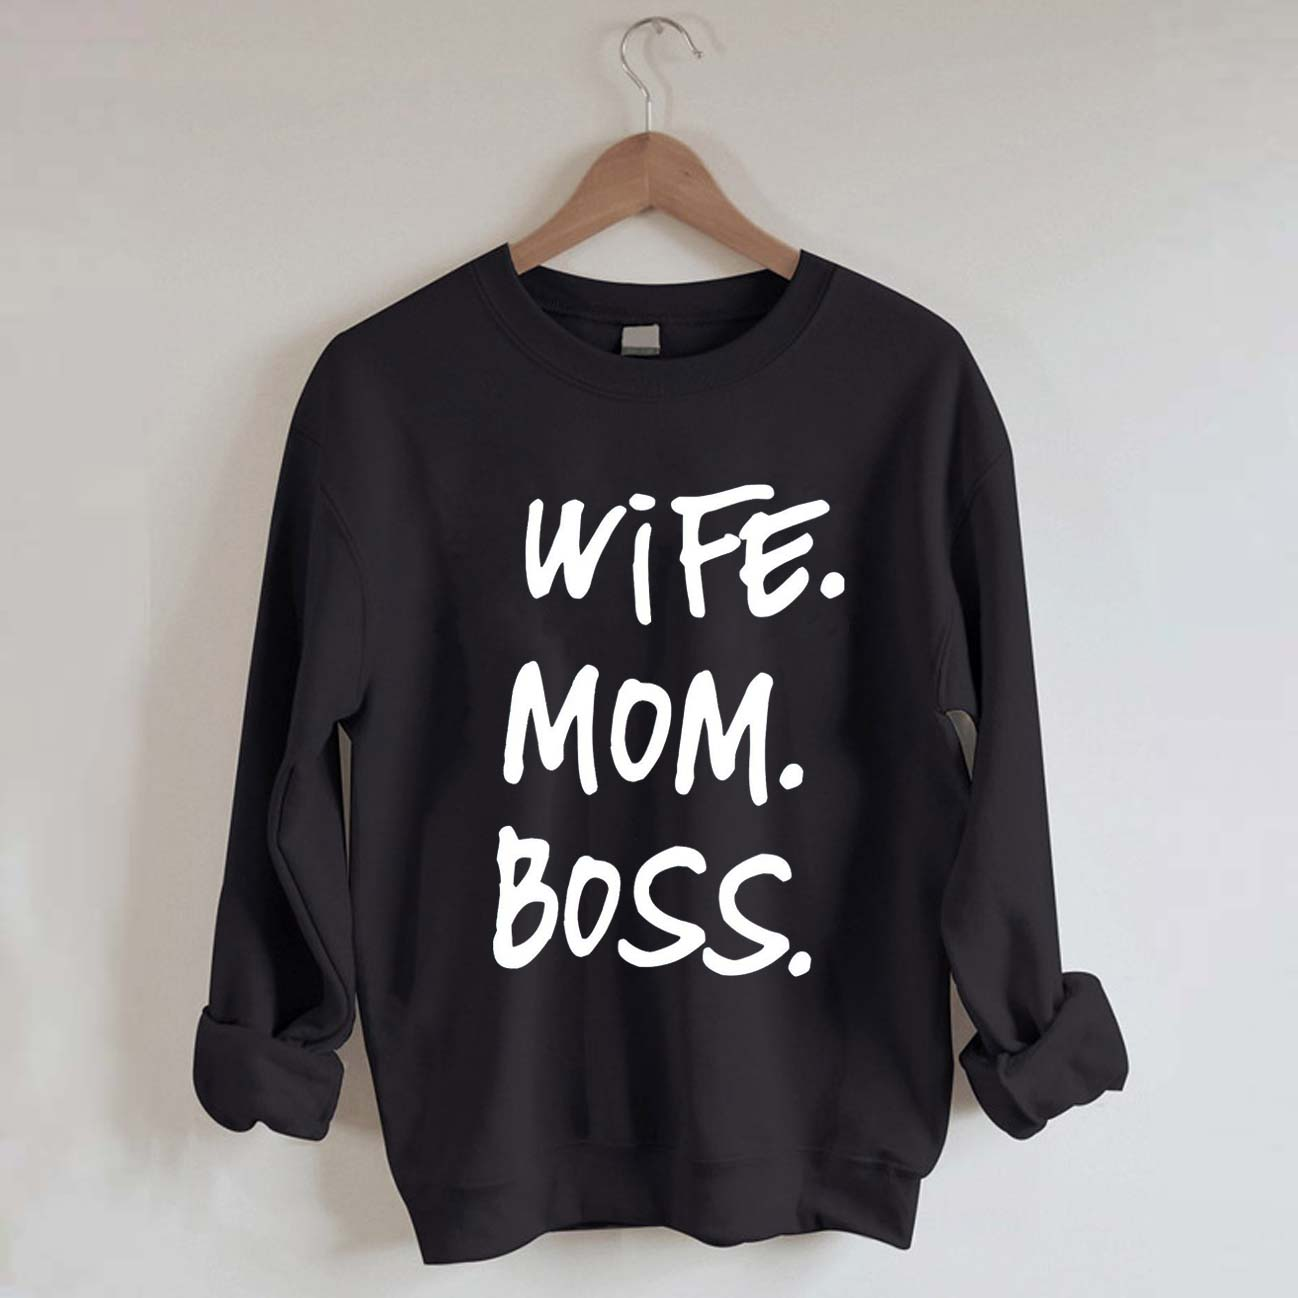 WIFE. MOM. BOSS. Black Sweatshirt